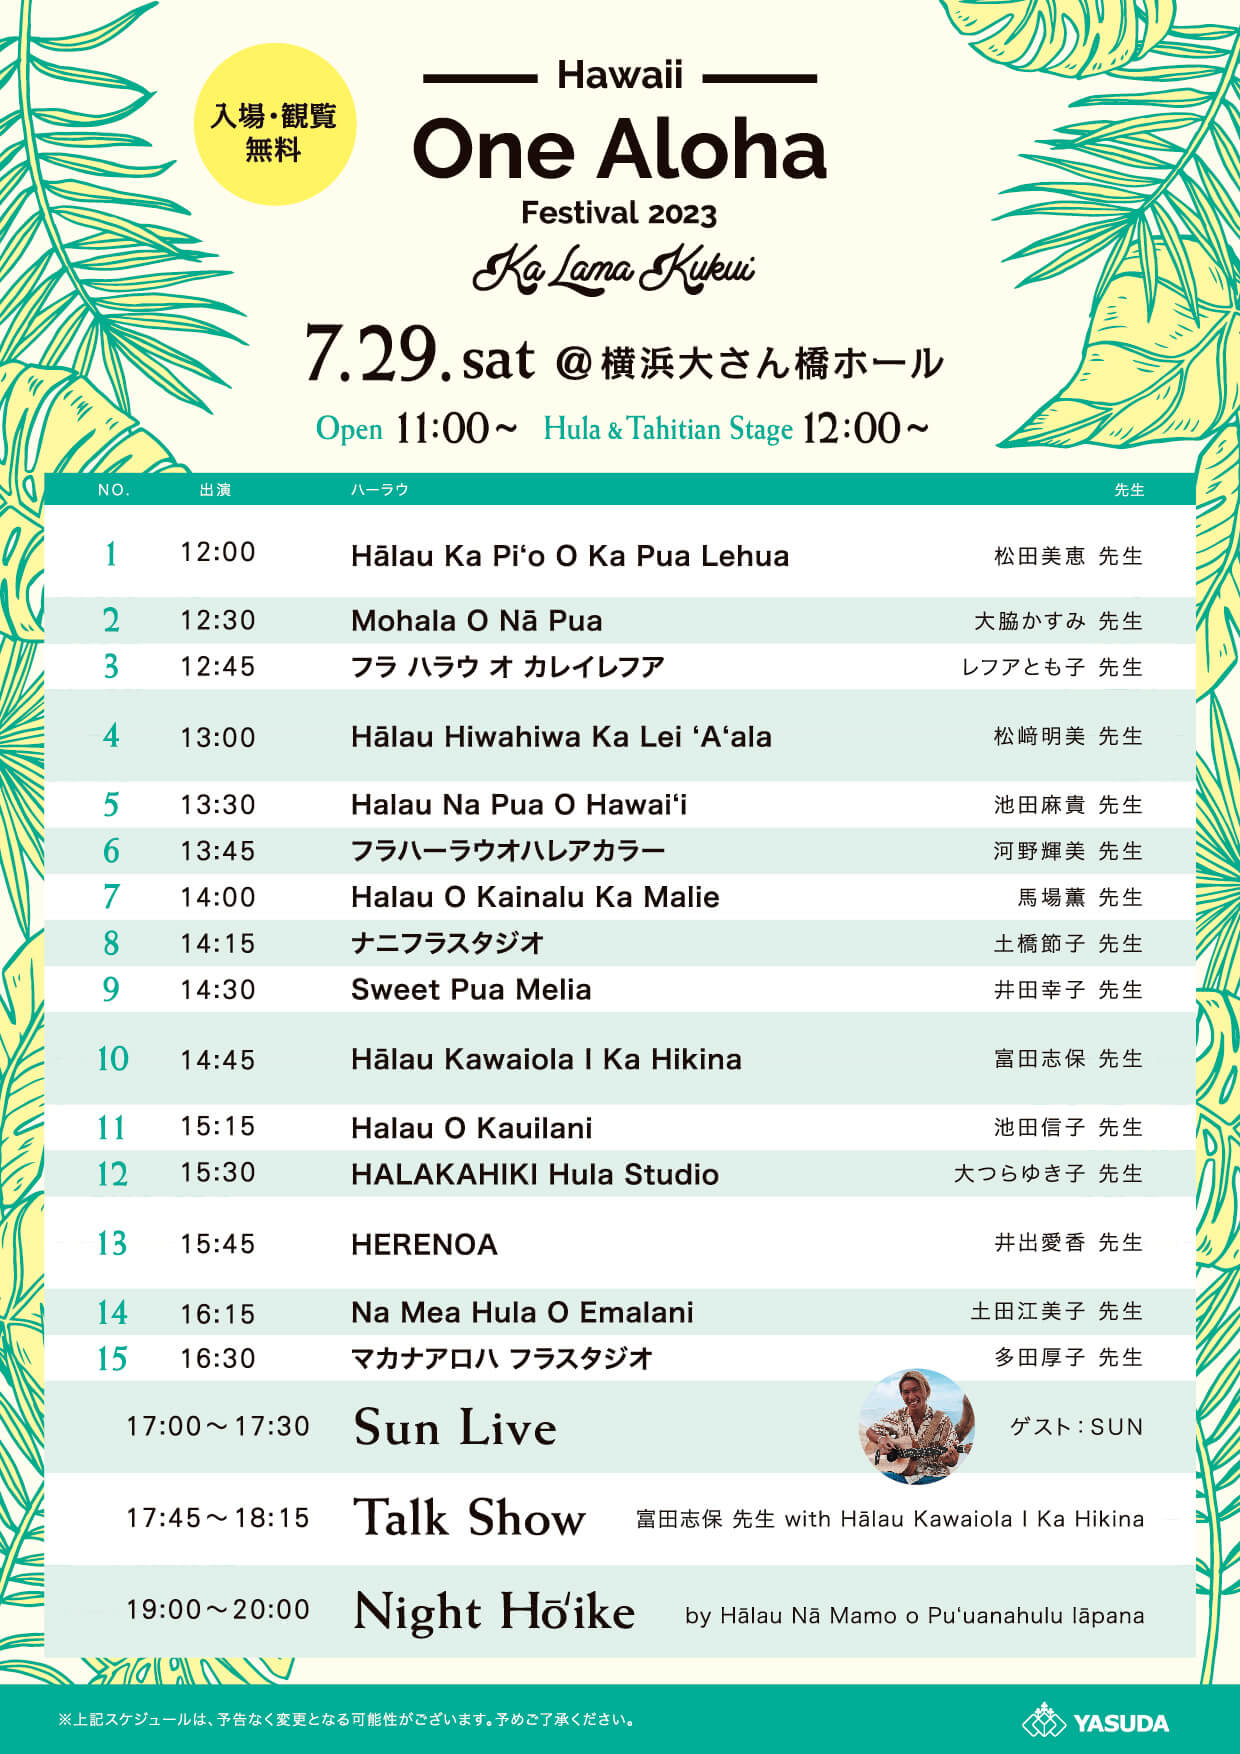 One Aloha festival 2023 KaLamaKukui 2023.7.29.sat